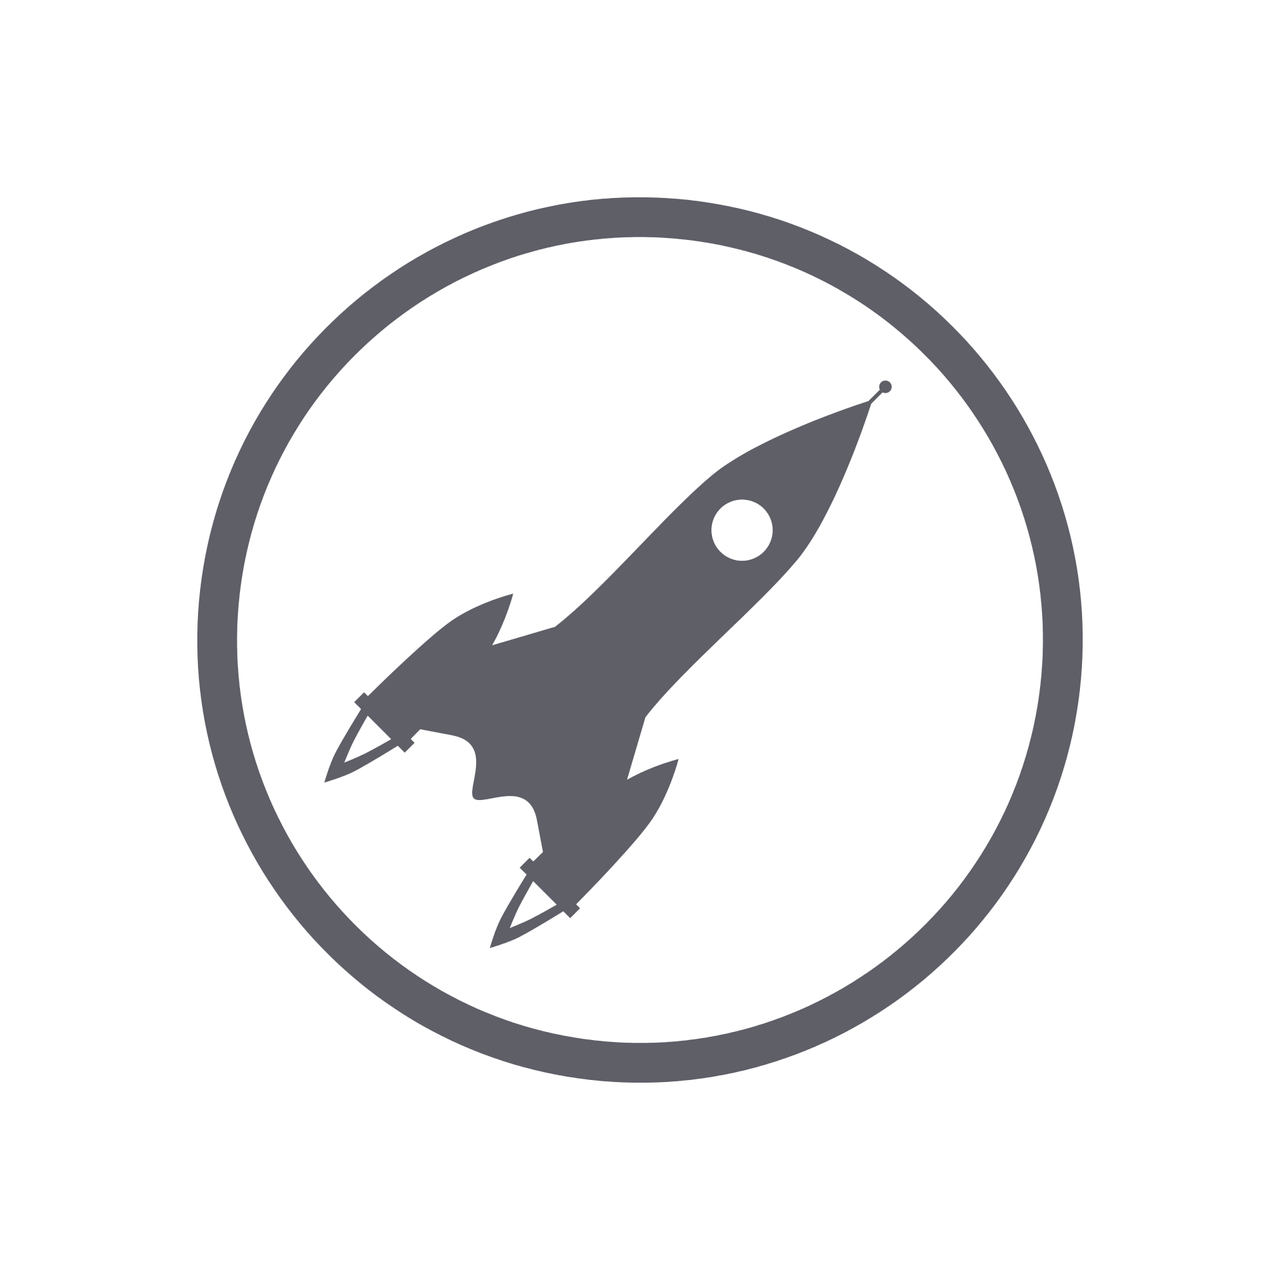 rocket icon symbol free photo